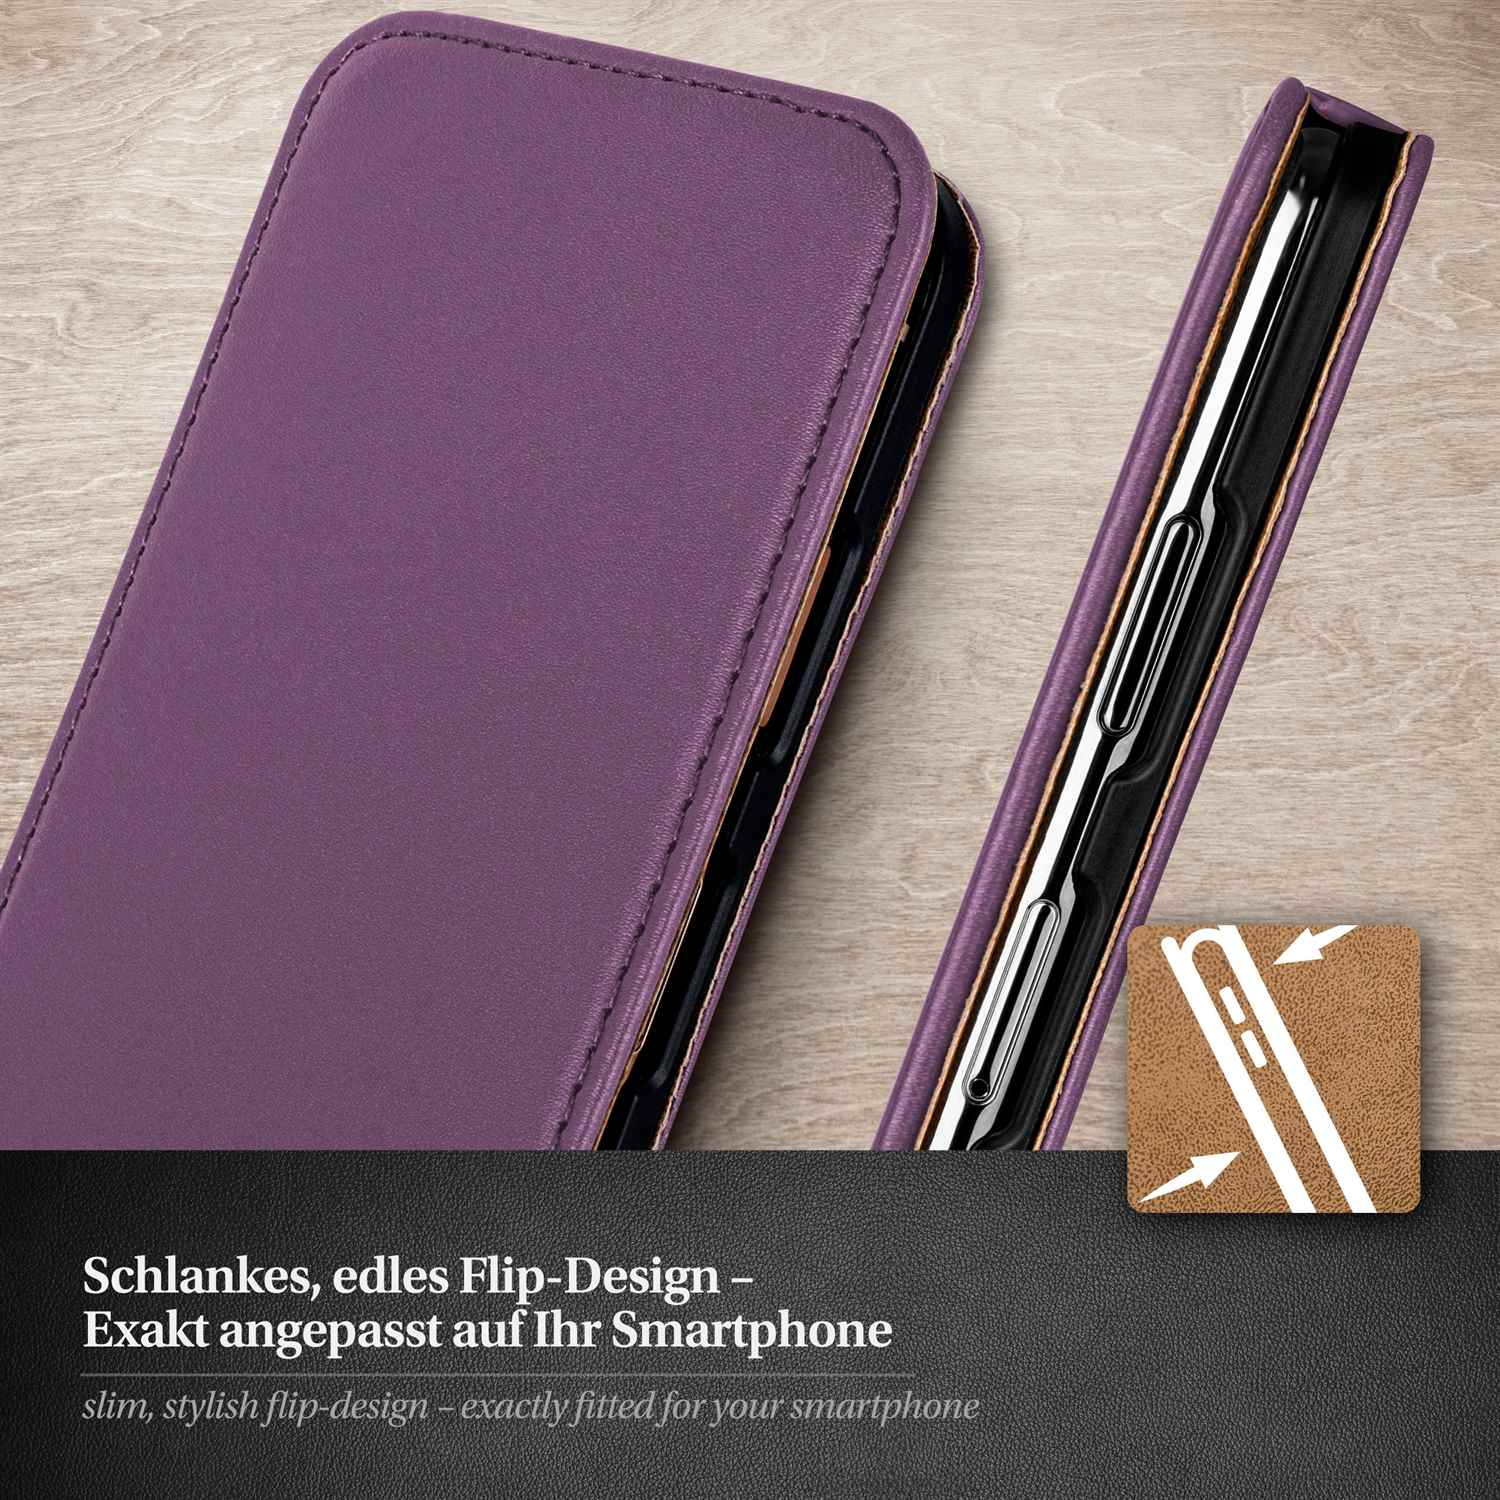 Samsung, MOEX Indigo-Violet S6 Flip Flip Galaxy Edge, Cover, Case,